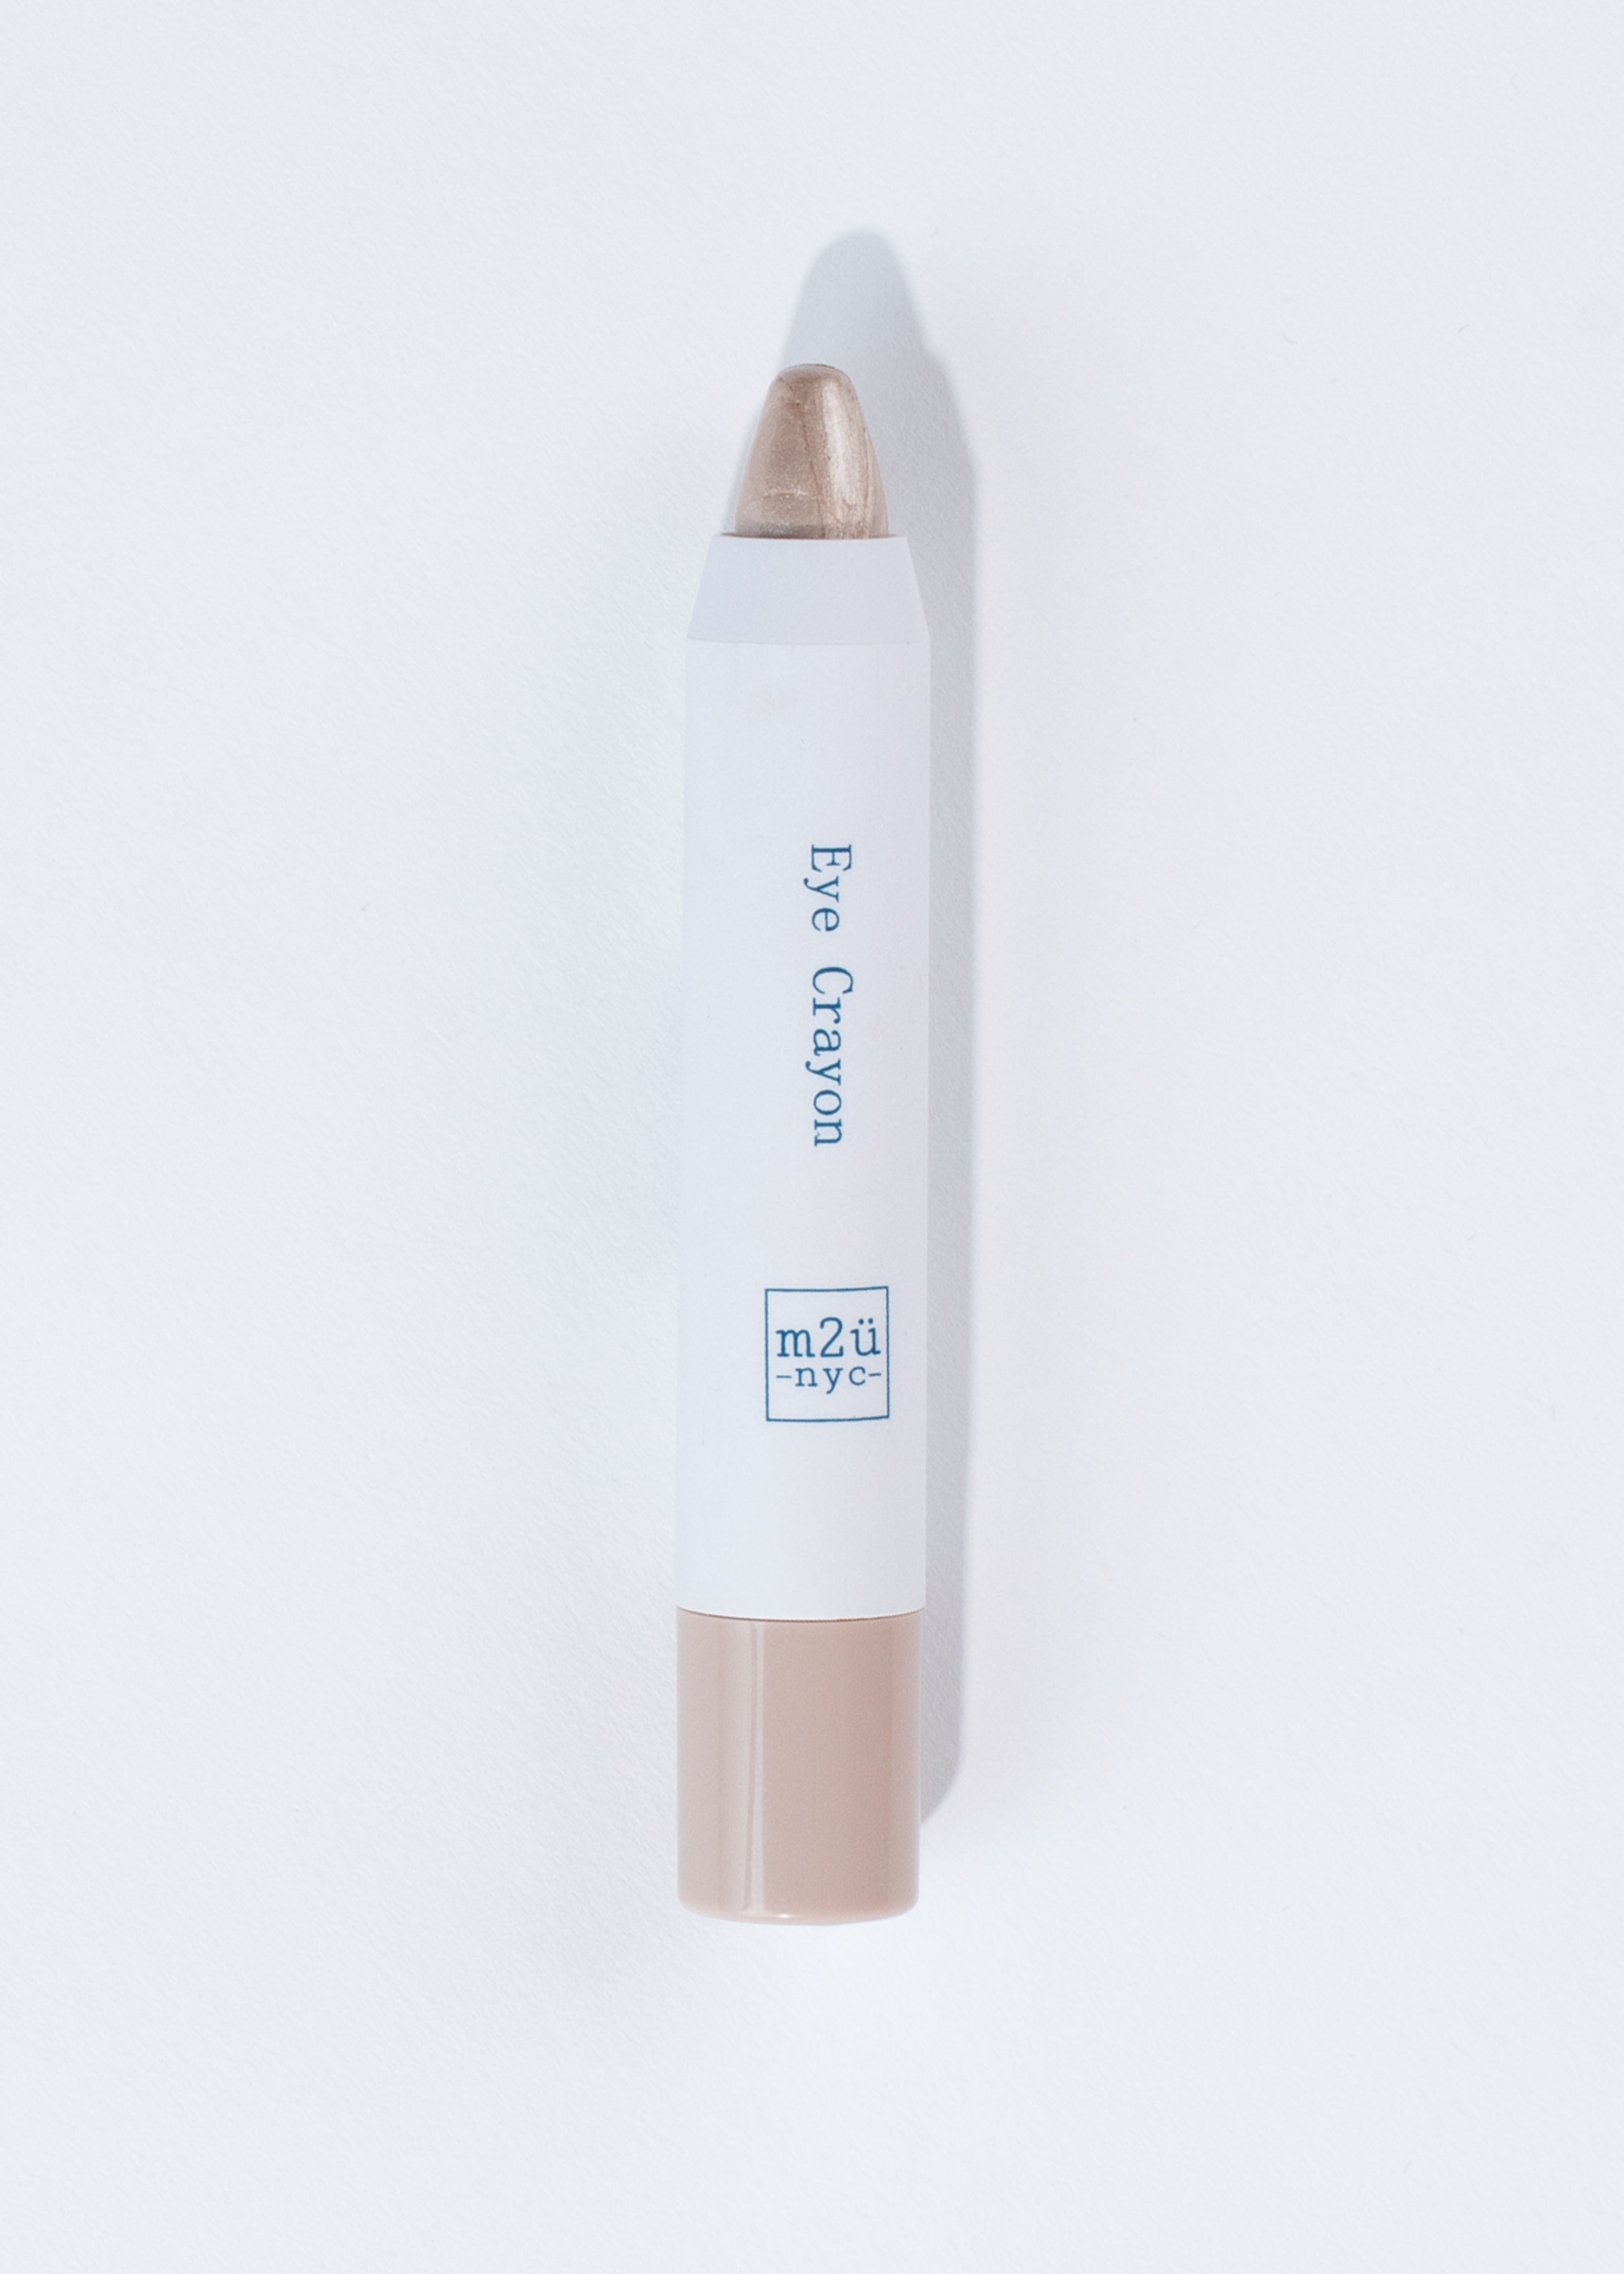 pencil-like eyeshadow crayon in shade champagne